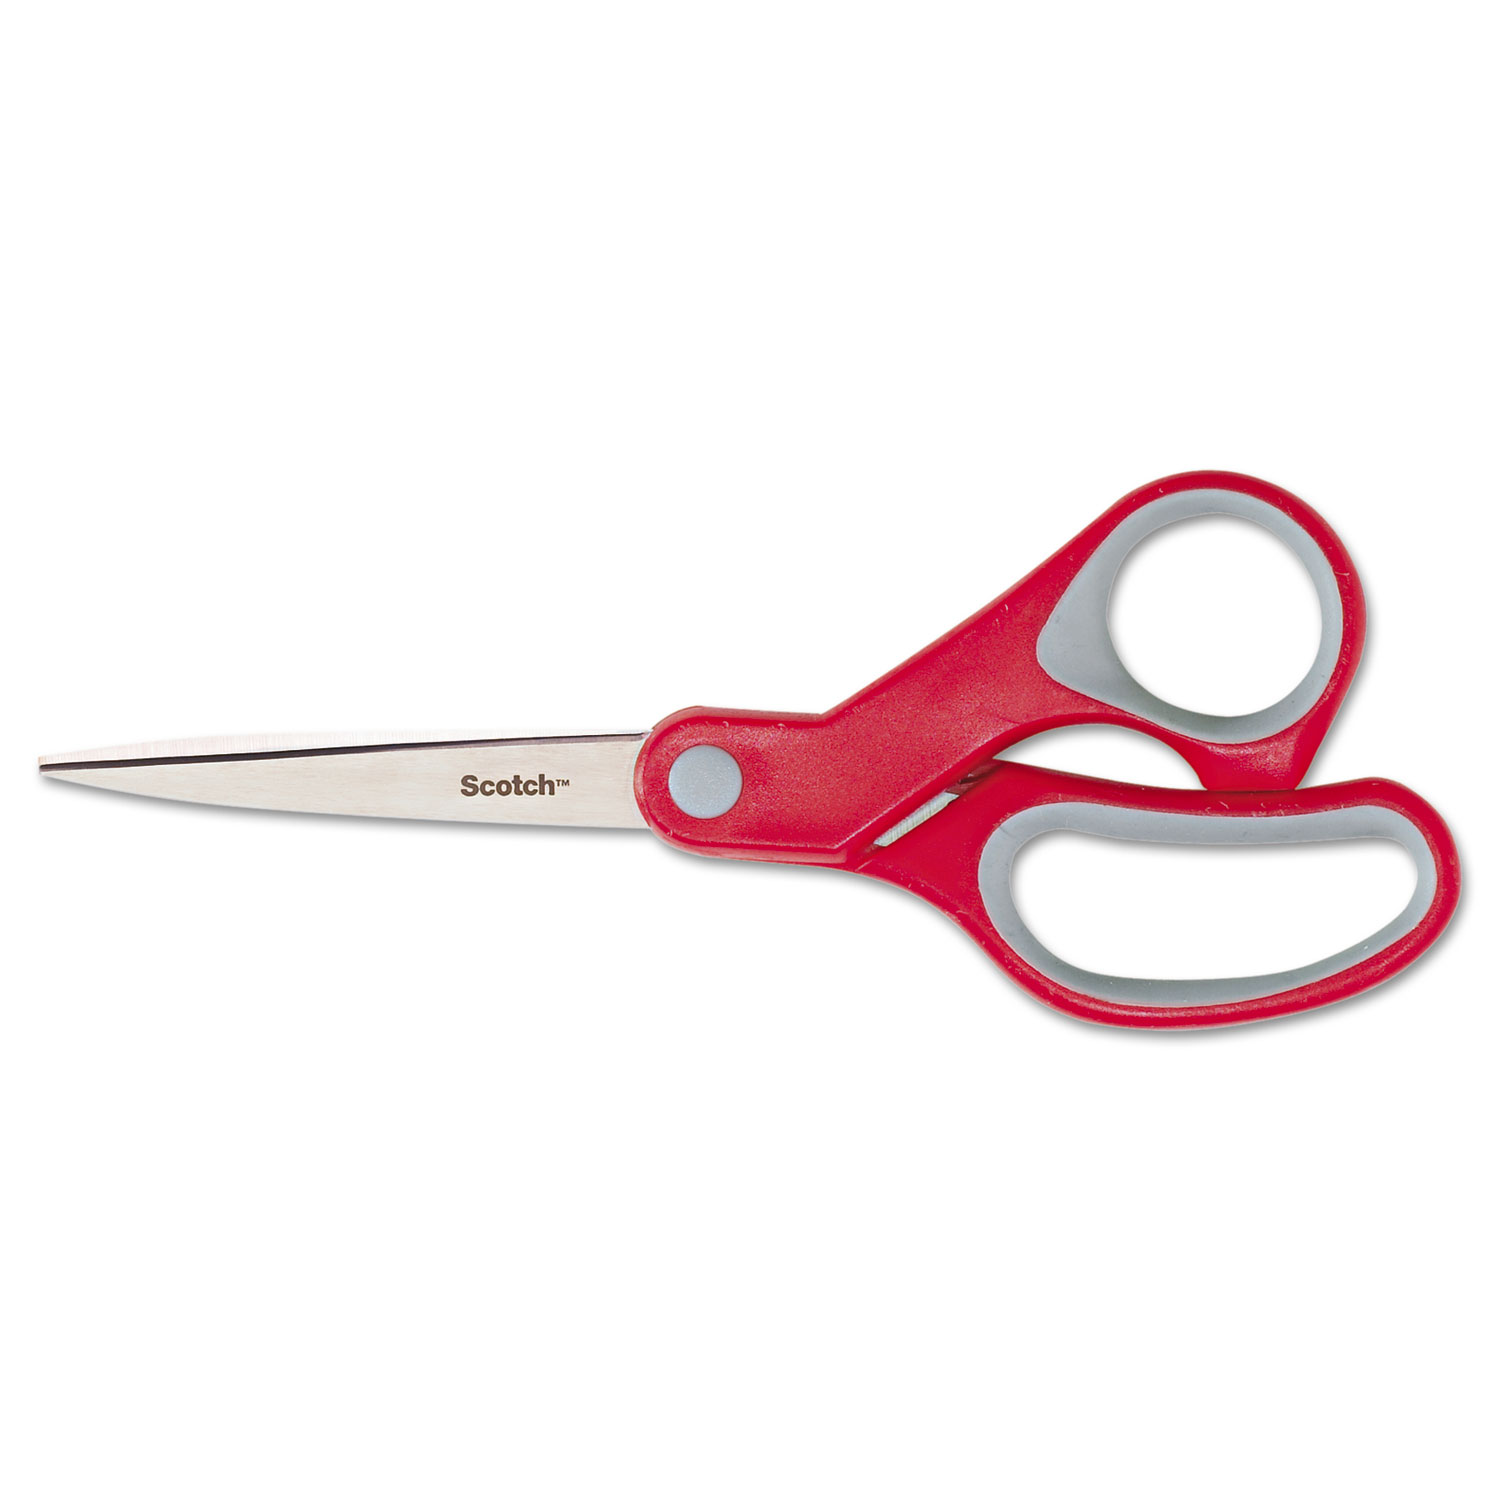  Scotch 1428 Multi-Purpose Scissors, 8 Long, 3.38 Cut Length, Gray/Red Straight Handle (MMM1428) 